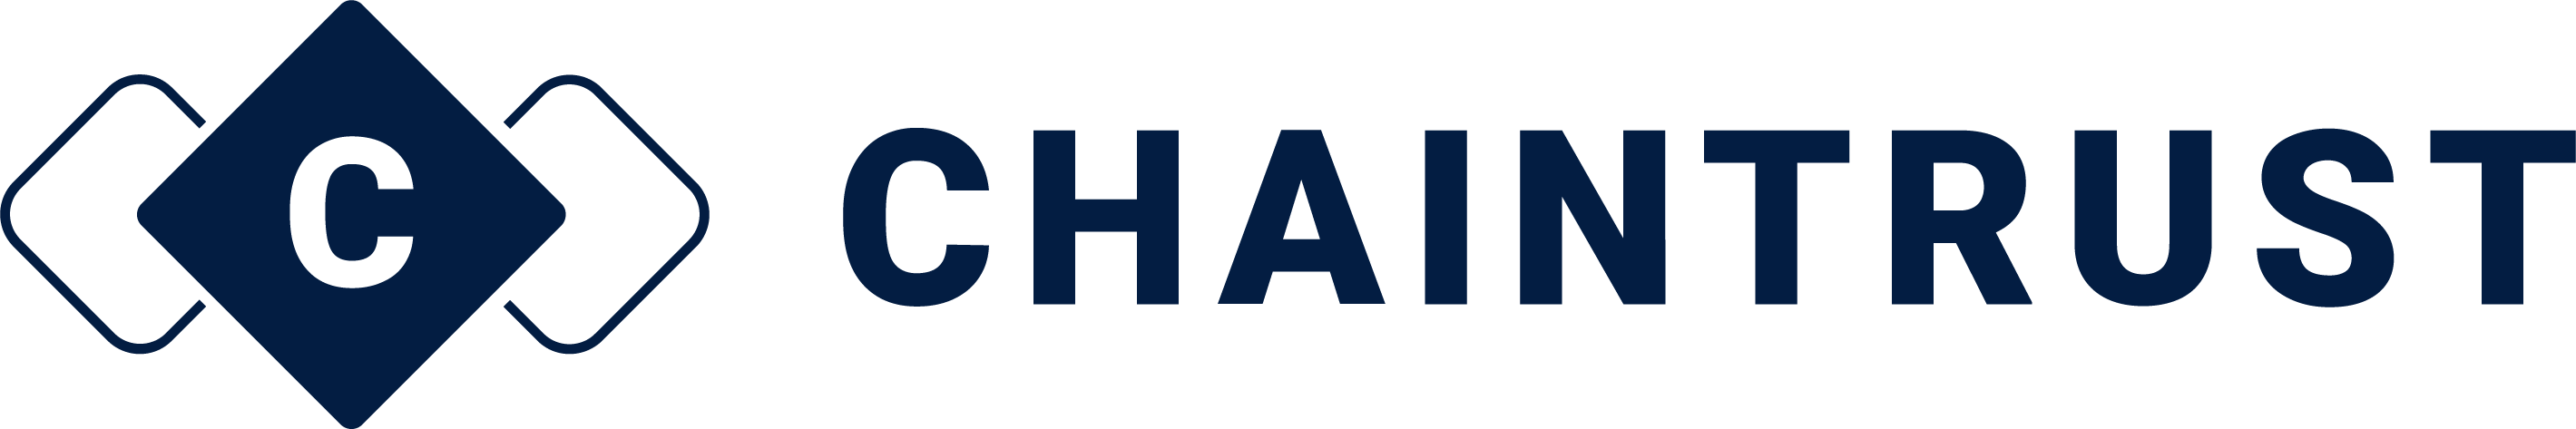 chaintrust. logo